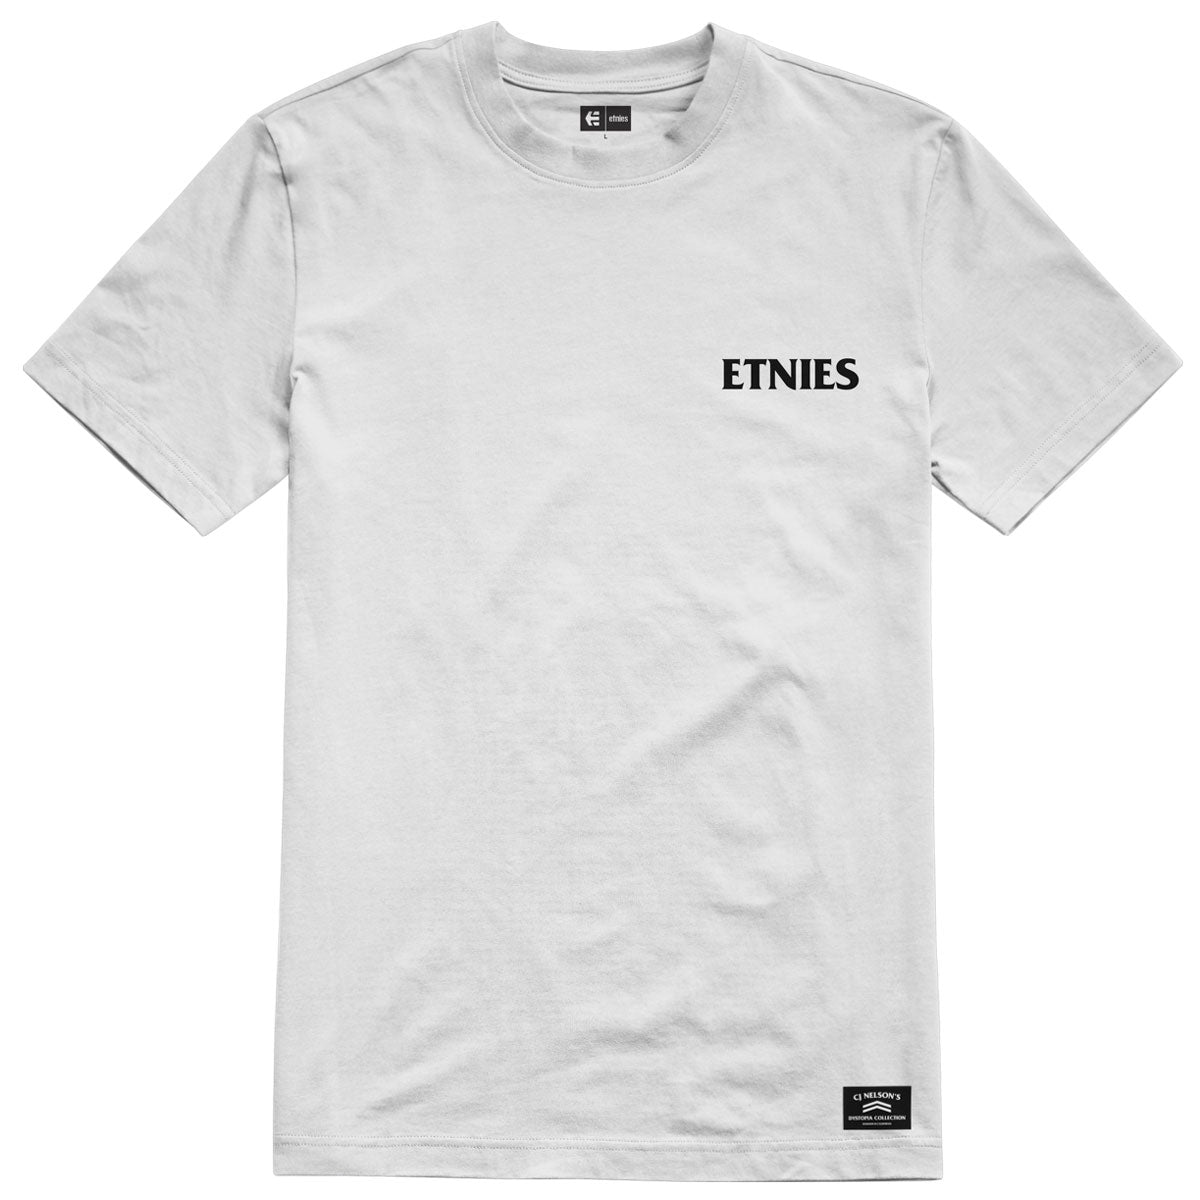 Etnies Dystopia Font T-Shirt - White image 1